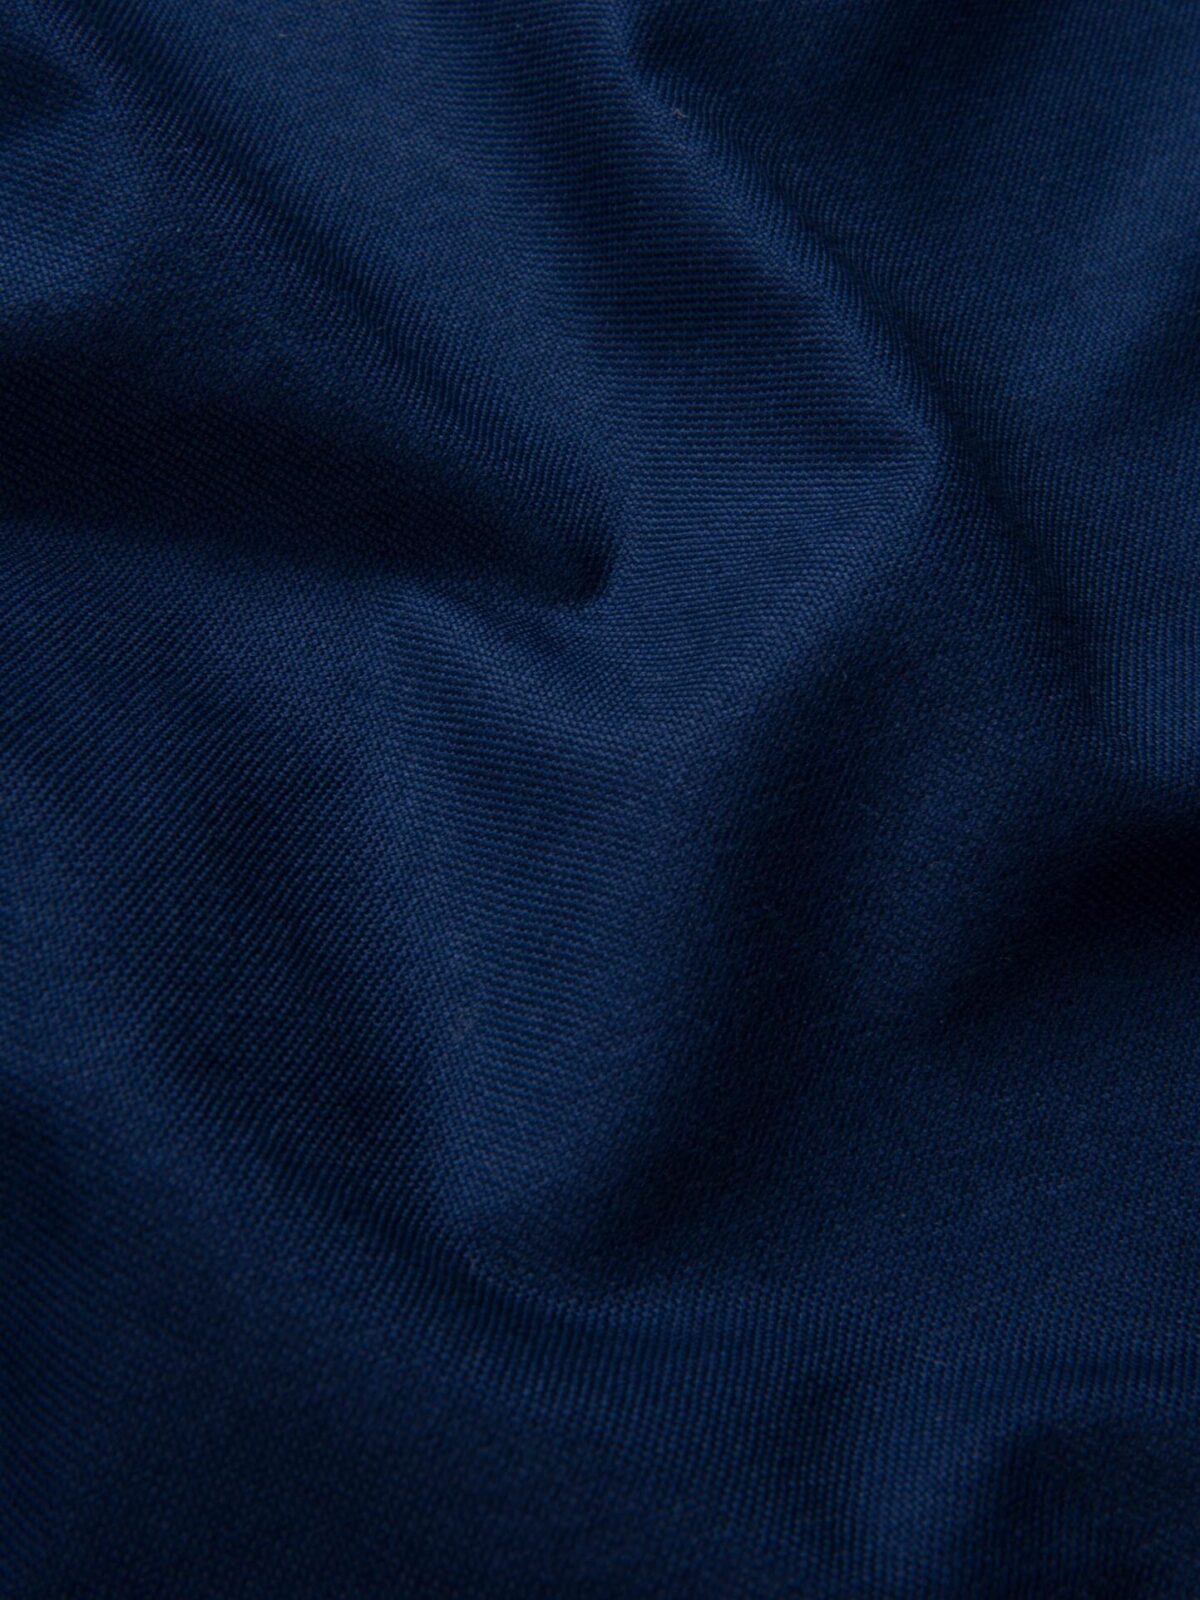 California Oxford Cloth 210 Denier 58 4-oz Royal Electric Blue (Standard  Pack 100 Yards)